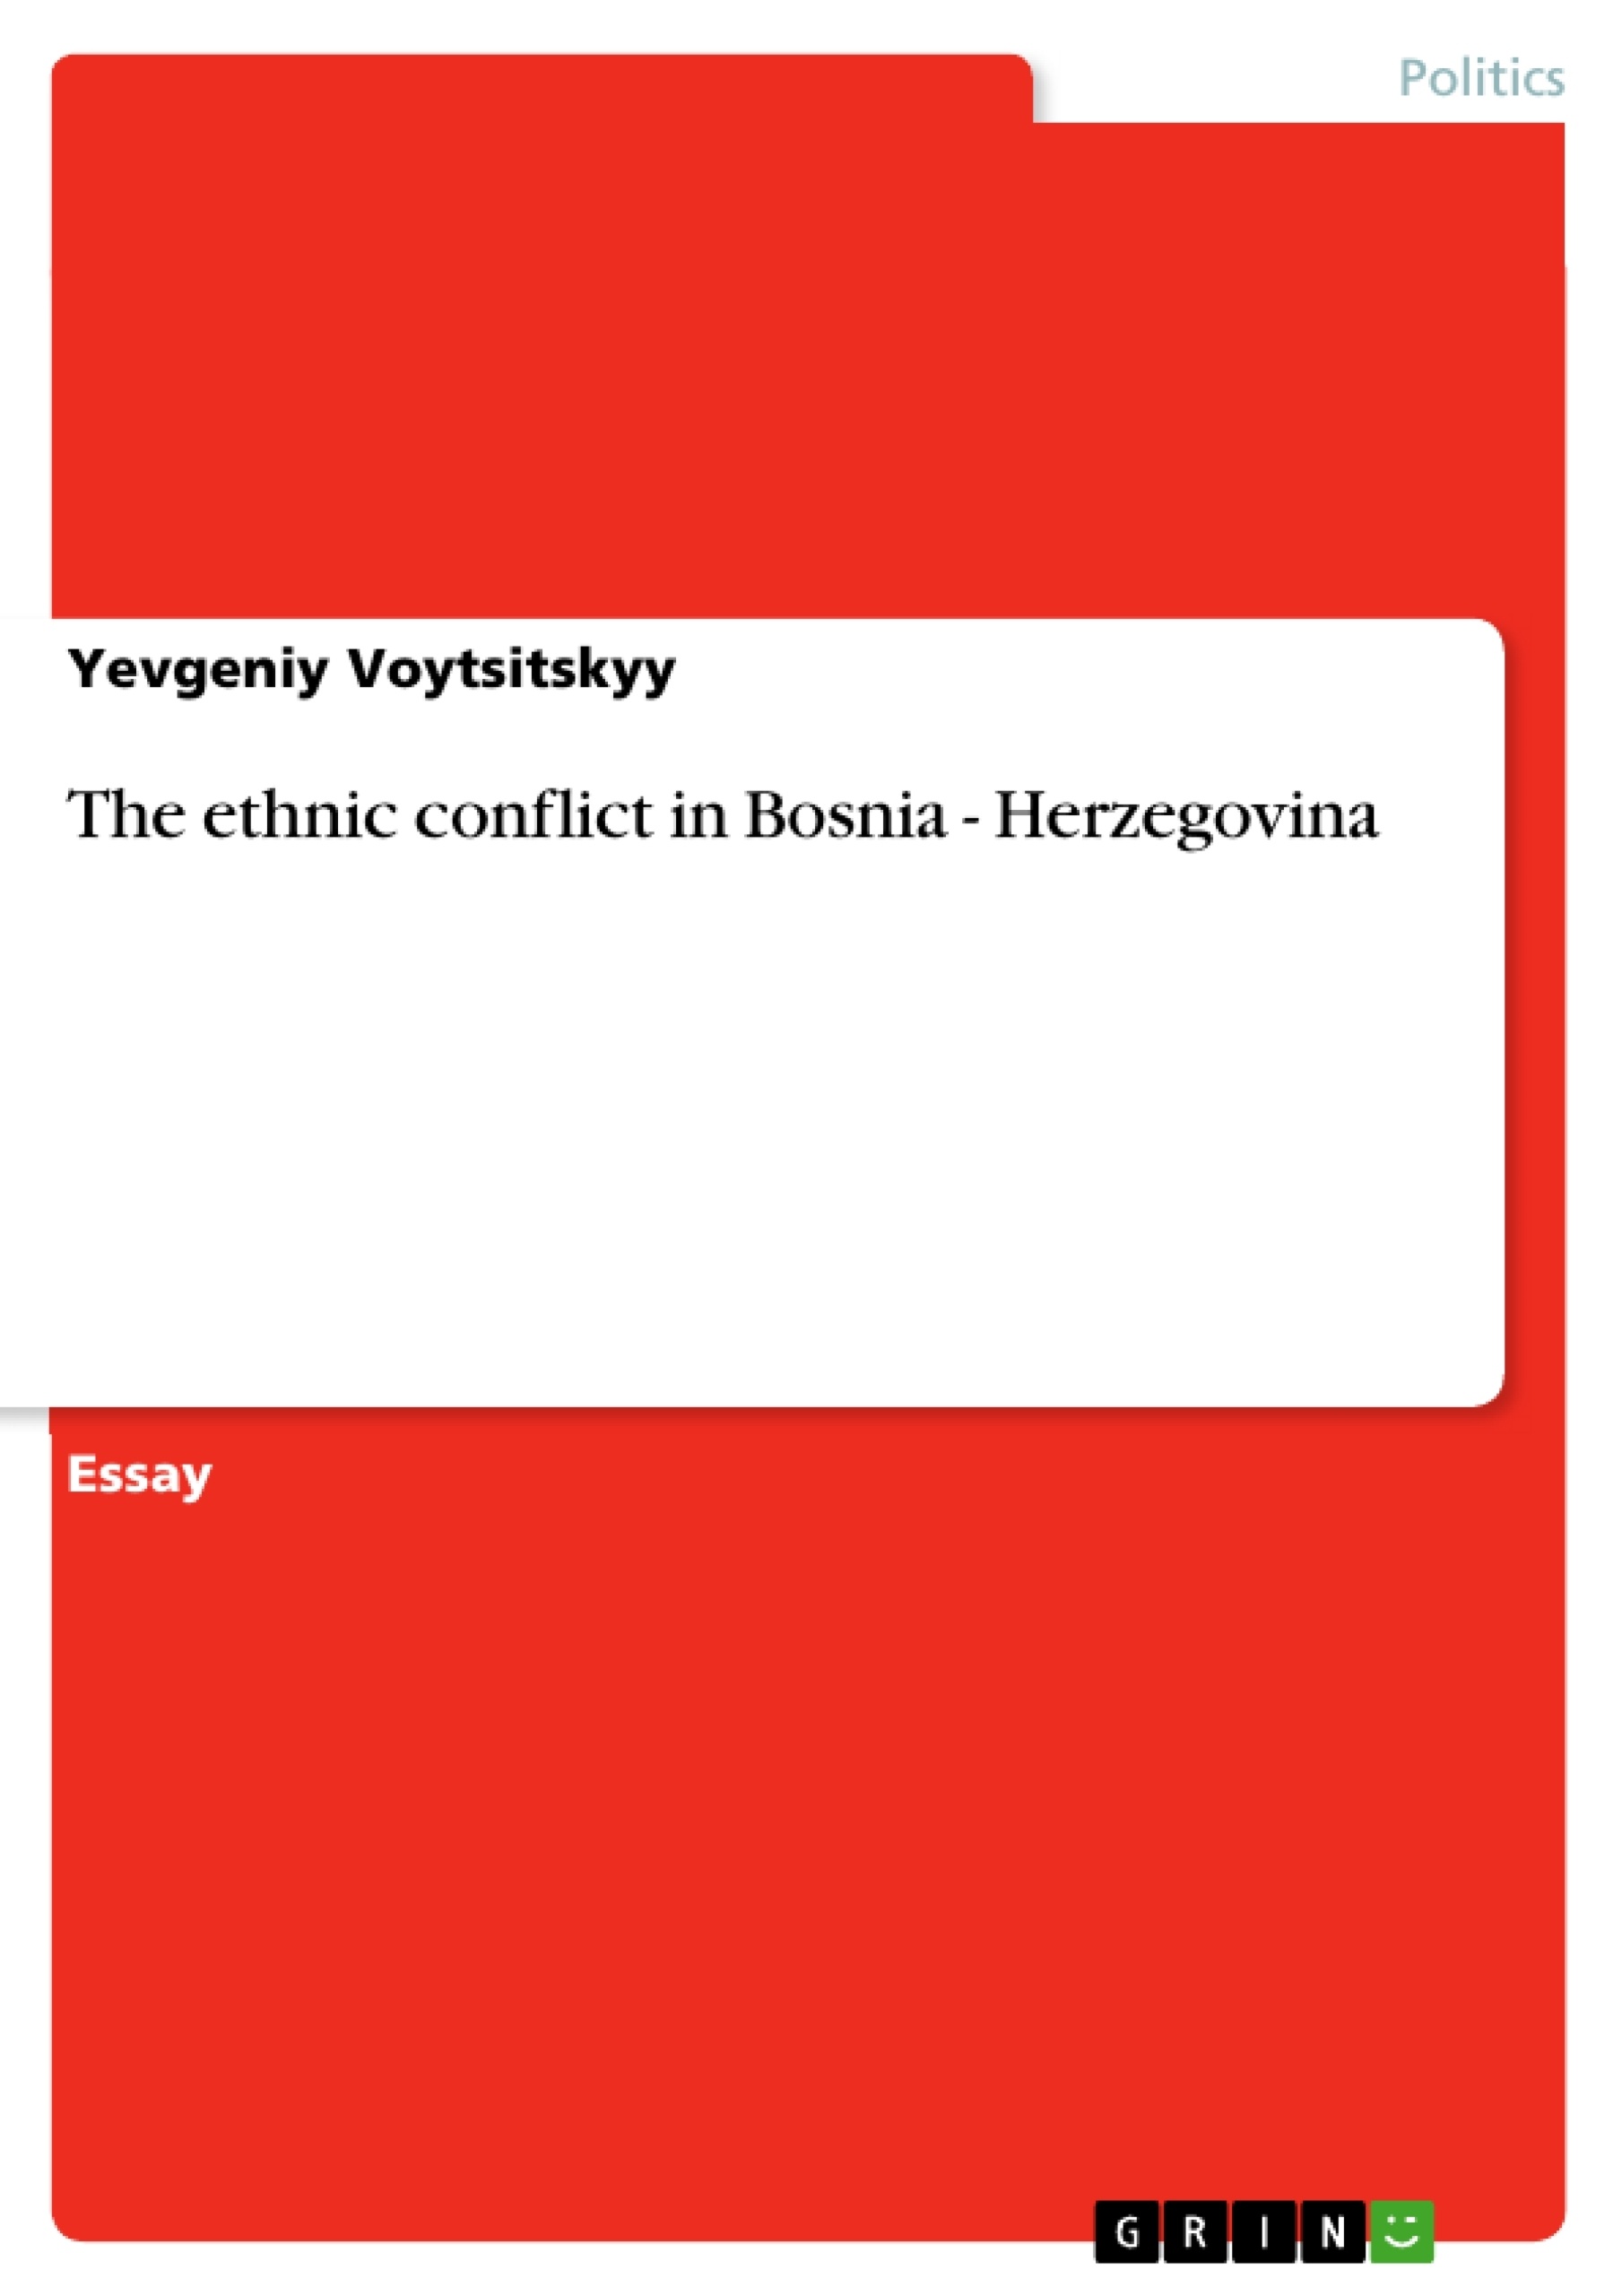 Título: The ethnic conflict in Bosnia - Herzegovina